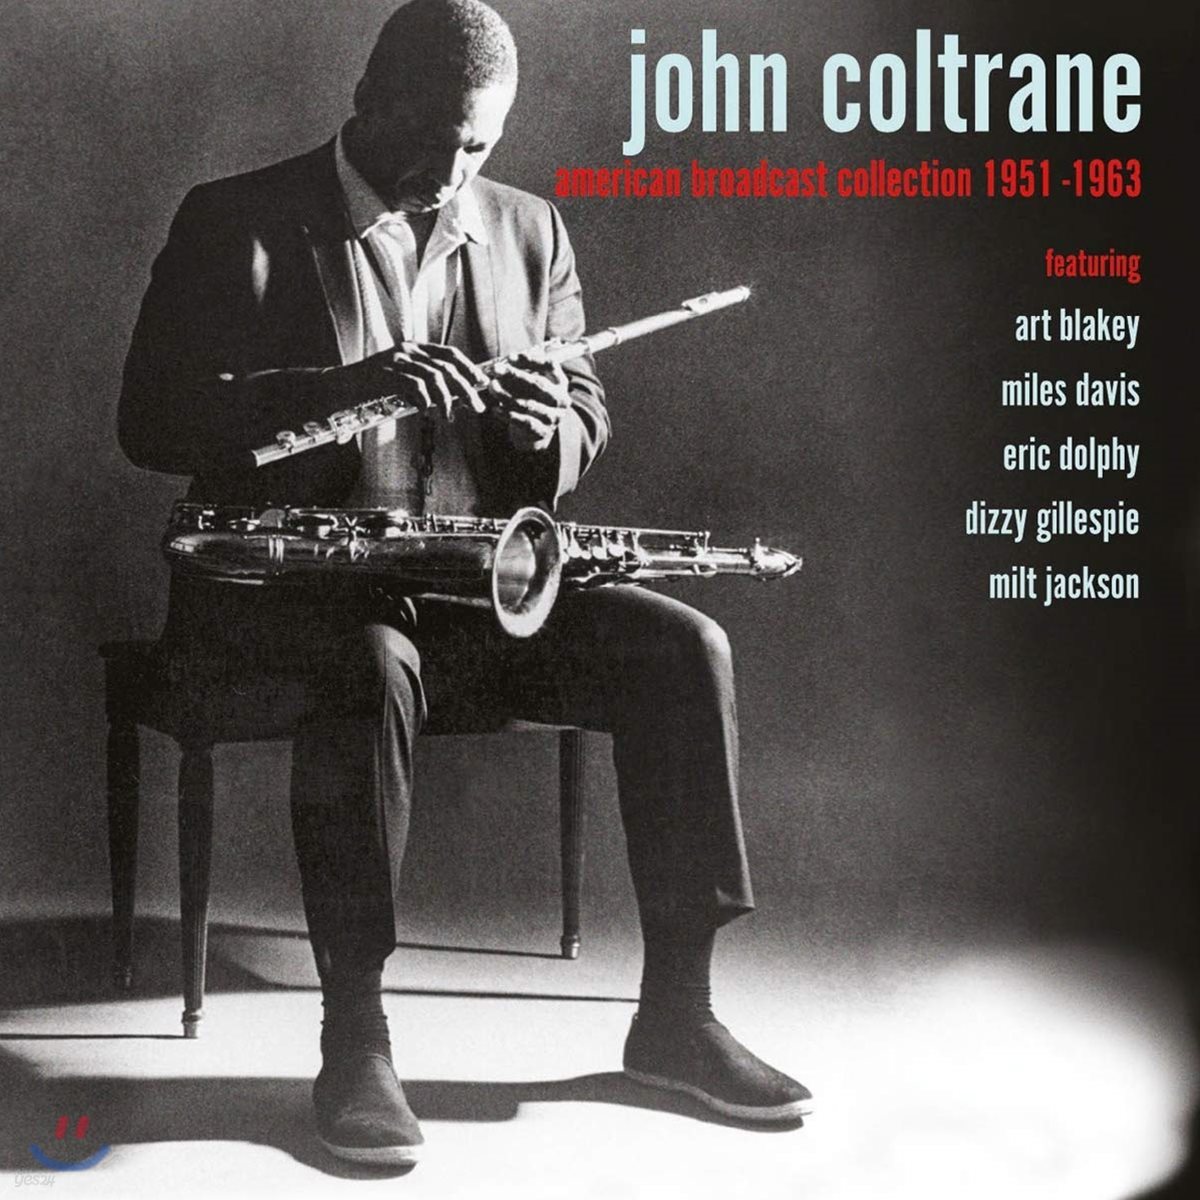 John Coltrane (존 콜트레인) - American Broadcast Collection 1951-1963